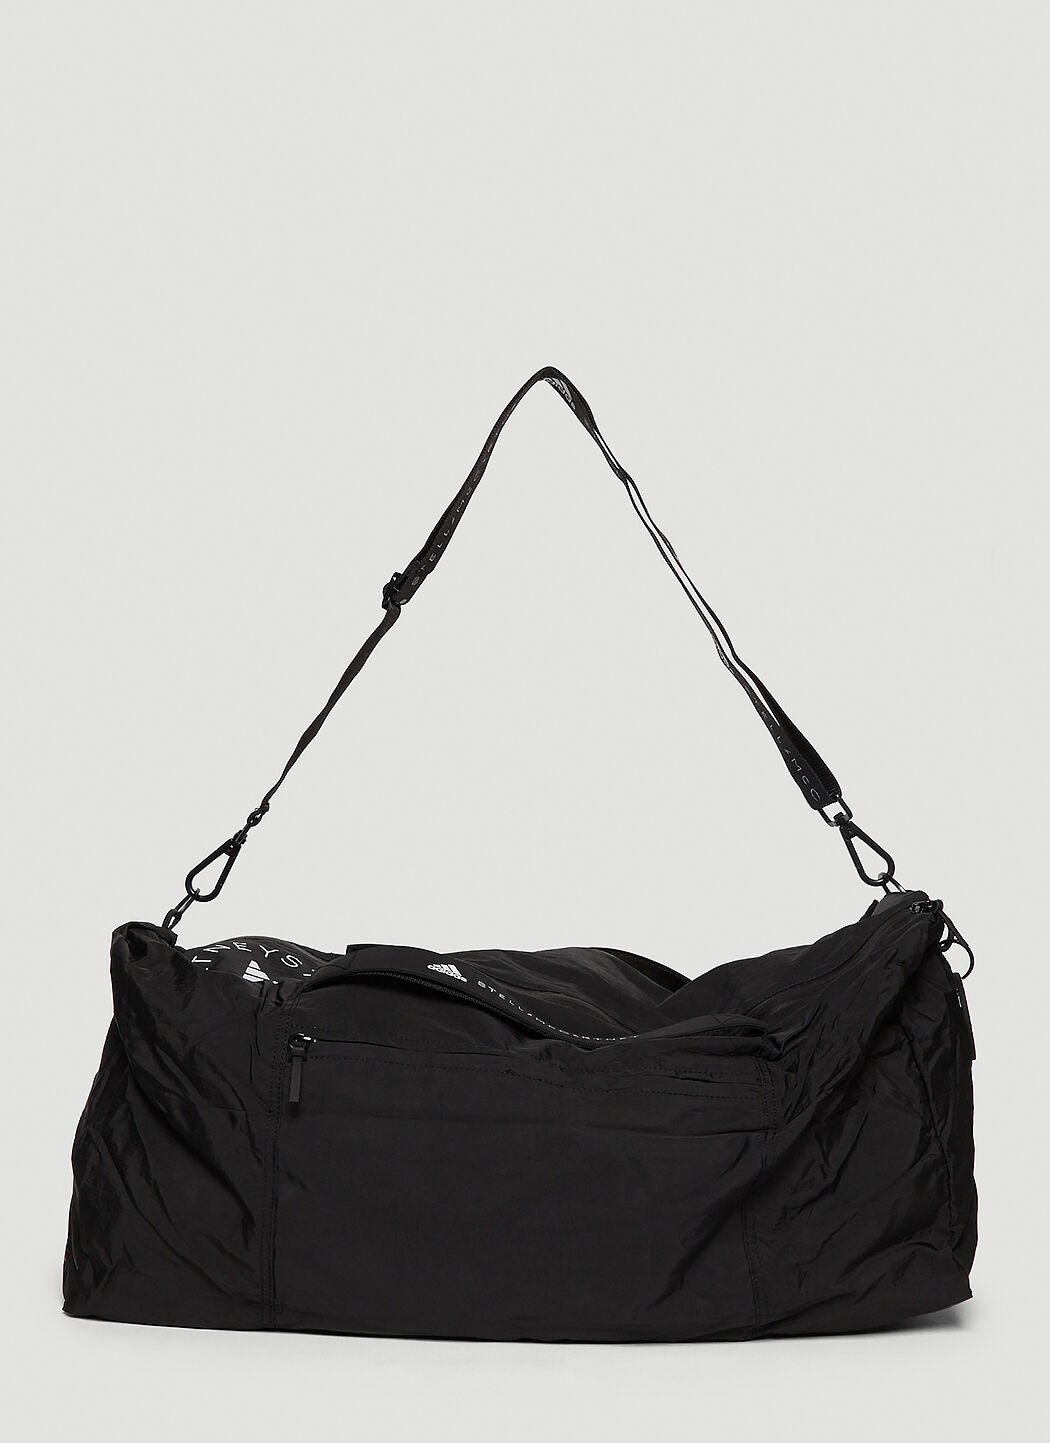 adidas by Stella McCartney Women's Studio Bag in Black | LN-CC®